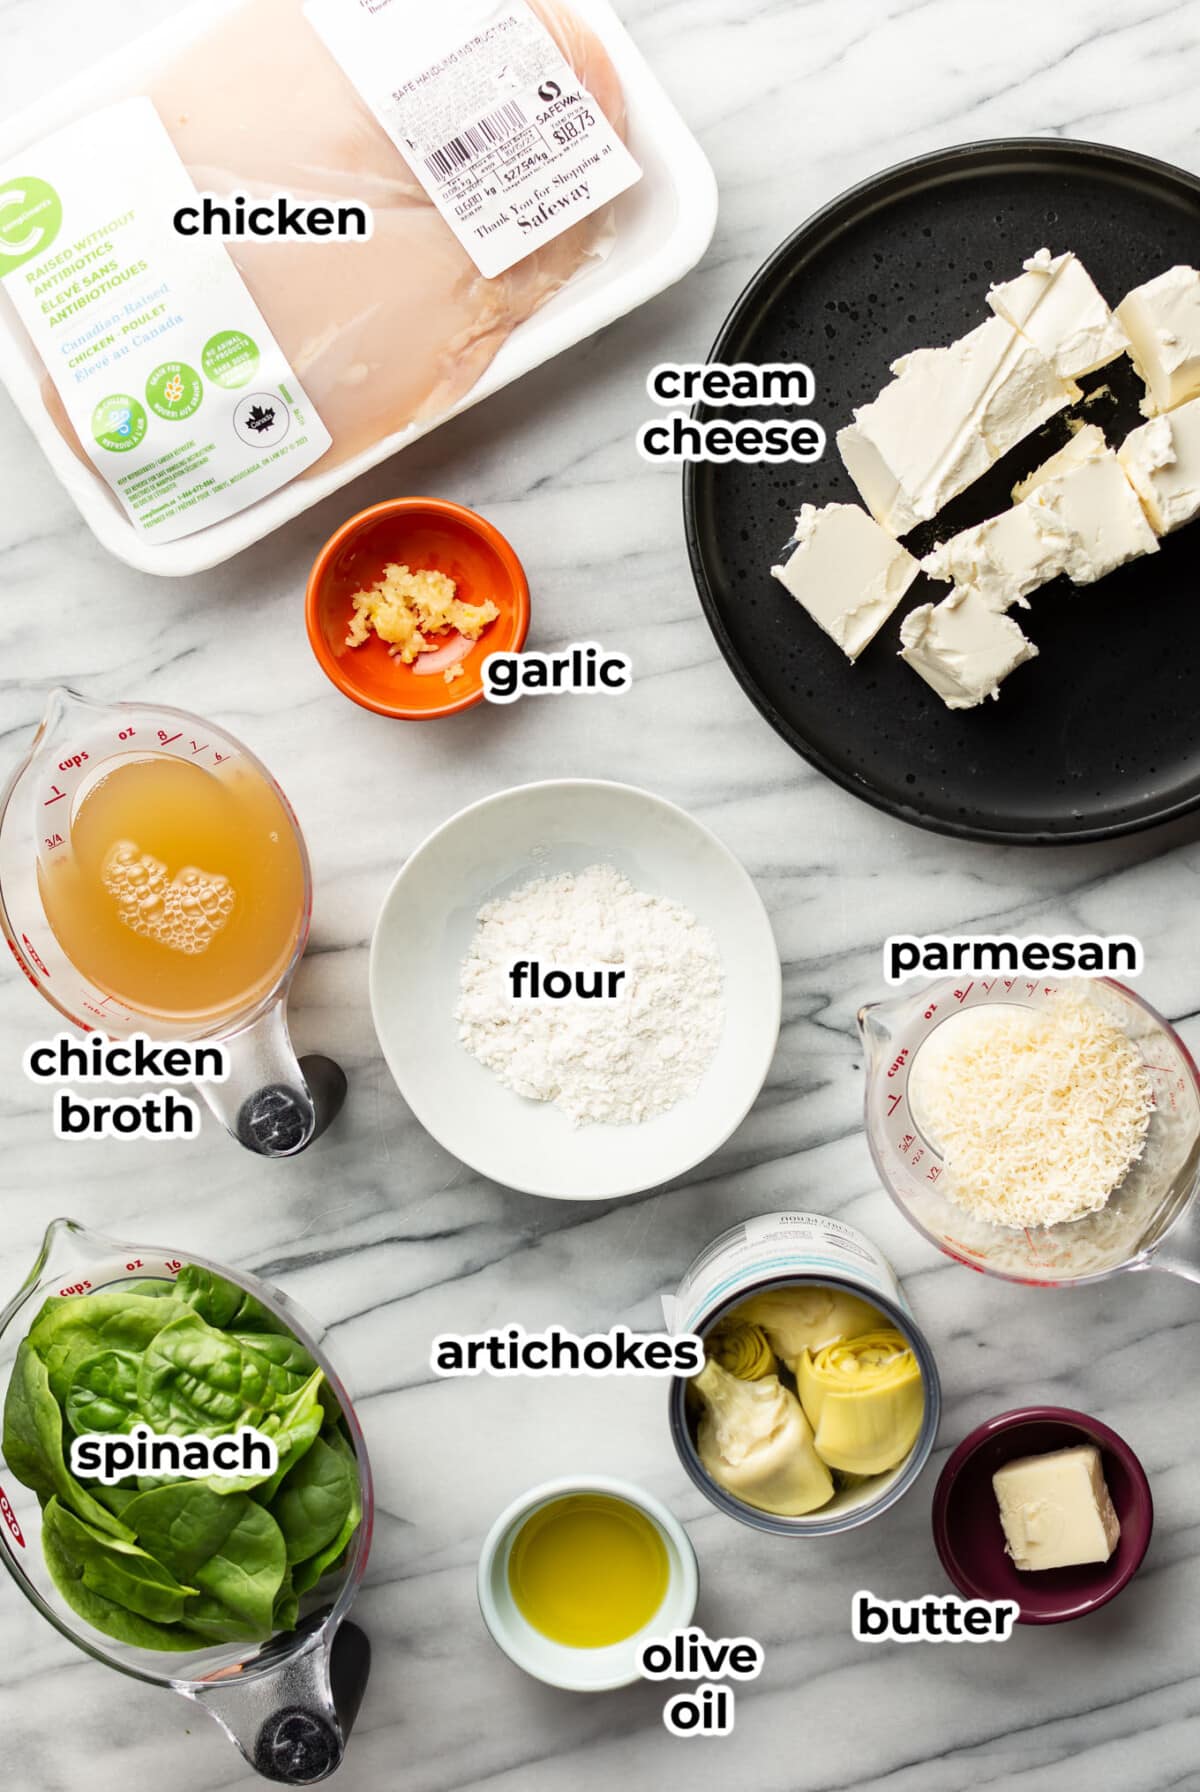 ingredients for spinach artichoke chicken in prep bowls